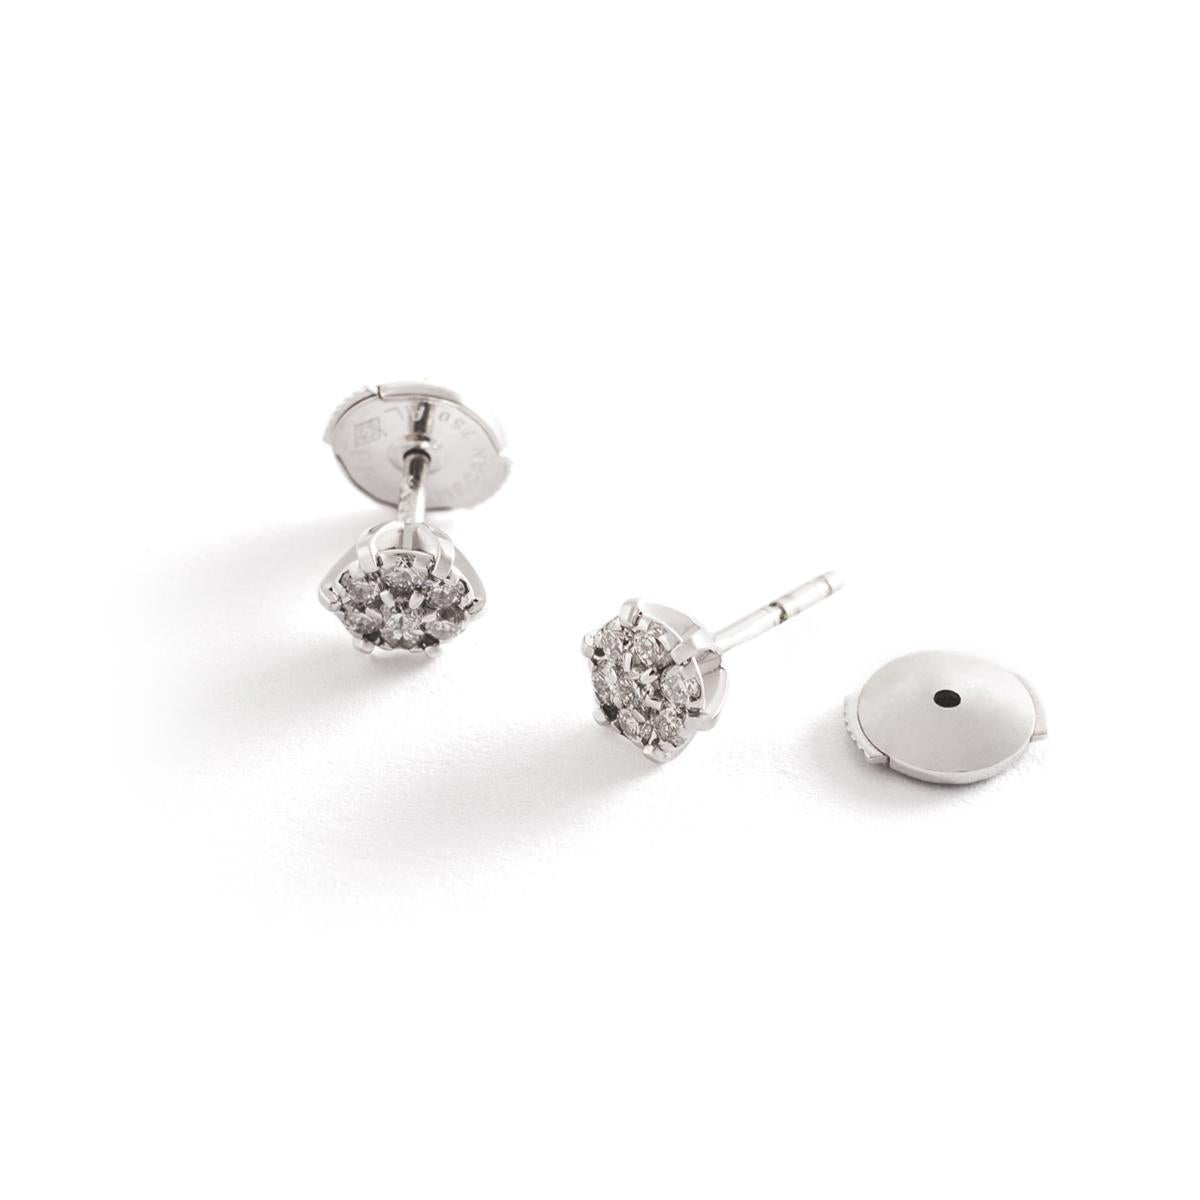 Ear Studs Earrings Diamond claw set on White Gold.
14 round cut Diamonds.
Diameter: 0.60 centimeters.
Gross weight: 1.56 grams.